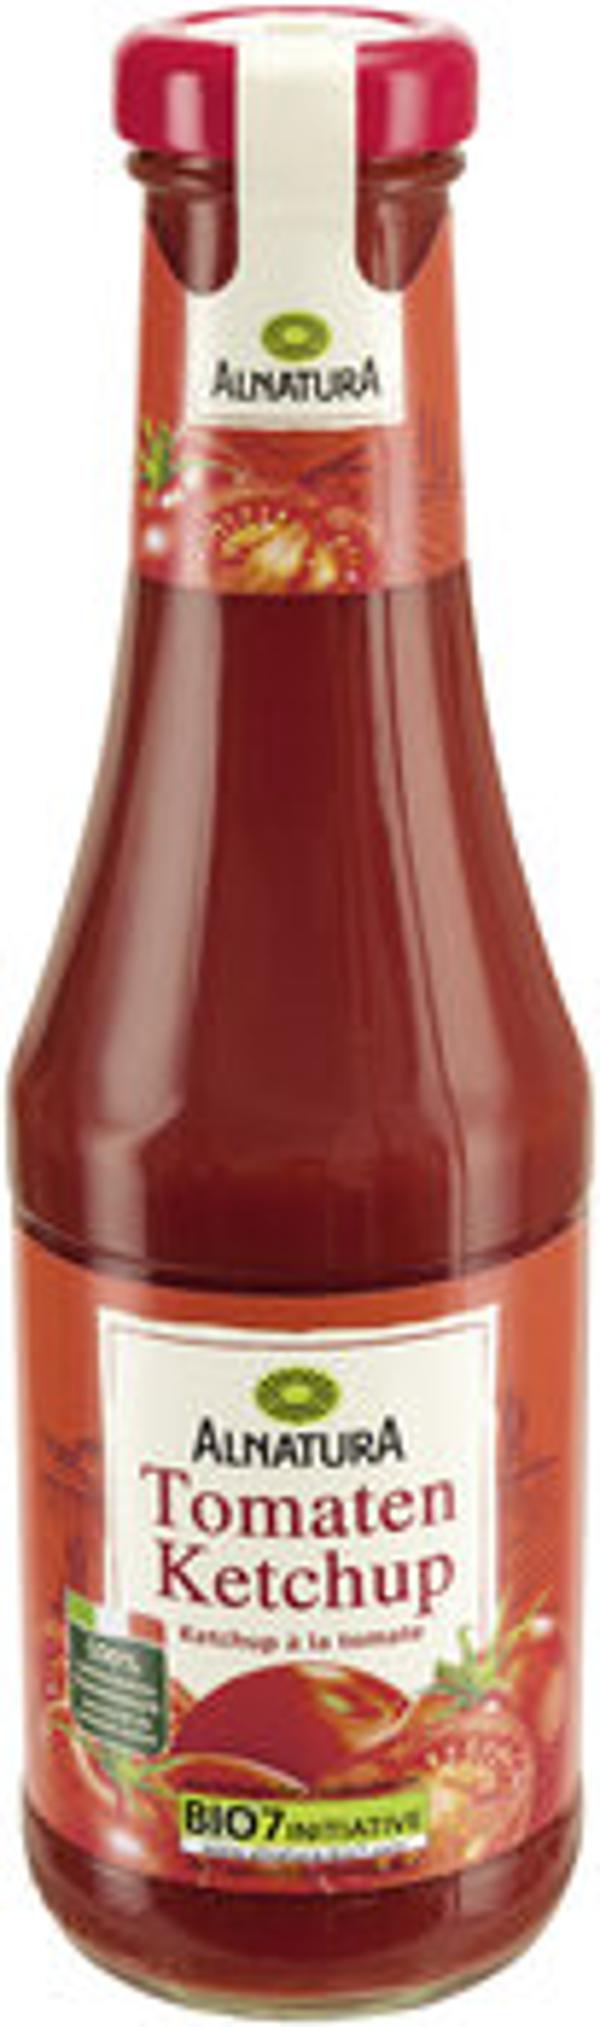 Produktfoto zu Alnatura Tomaten Ketchup 0,5L